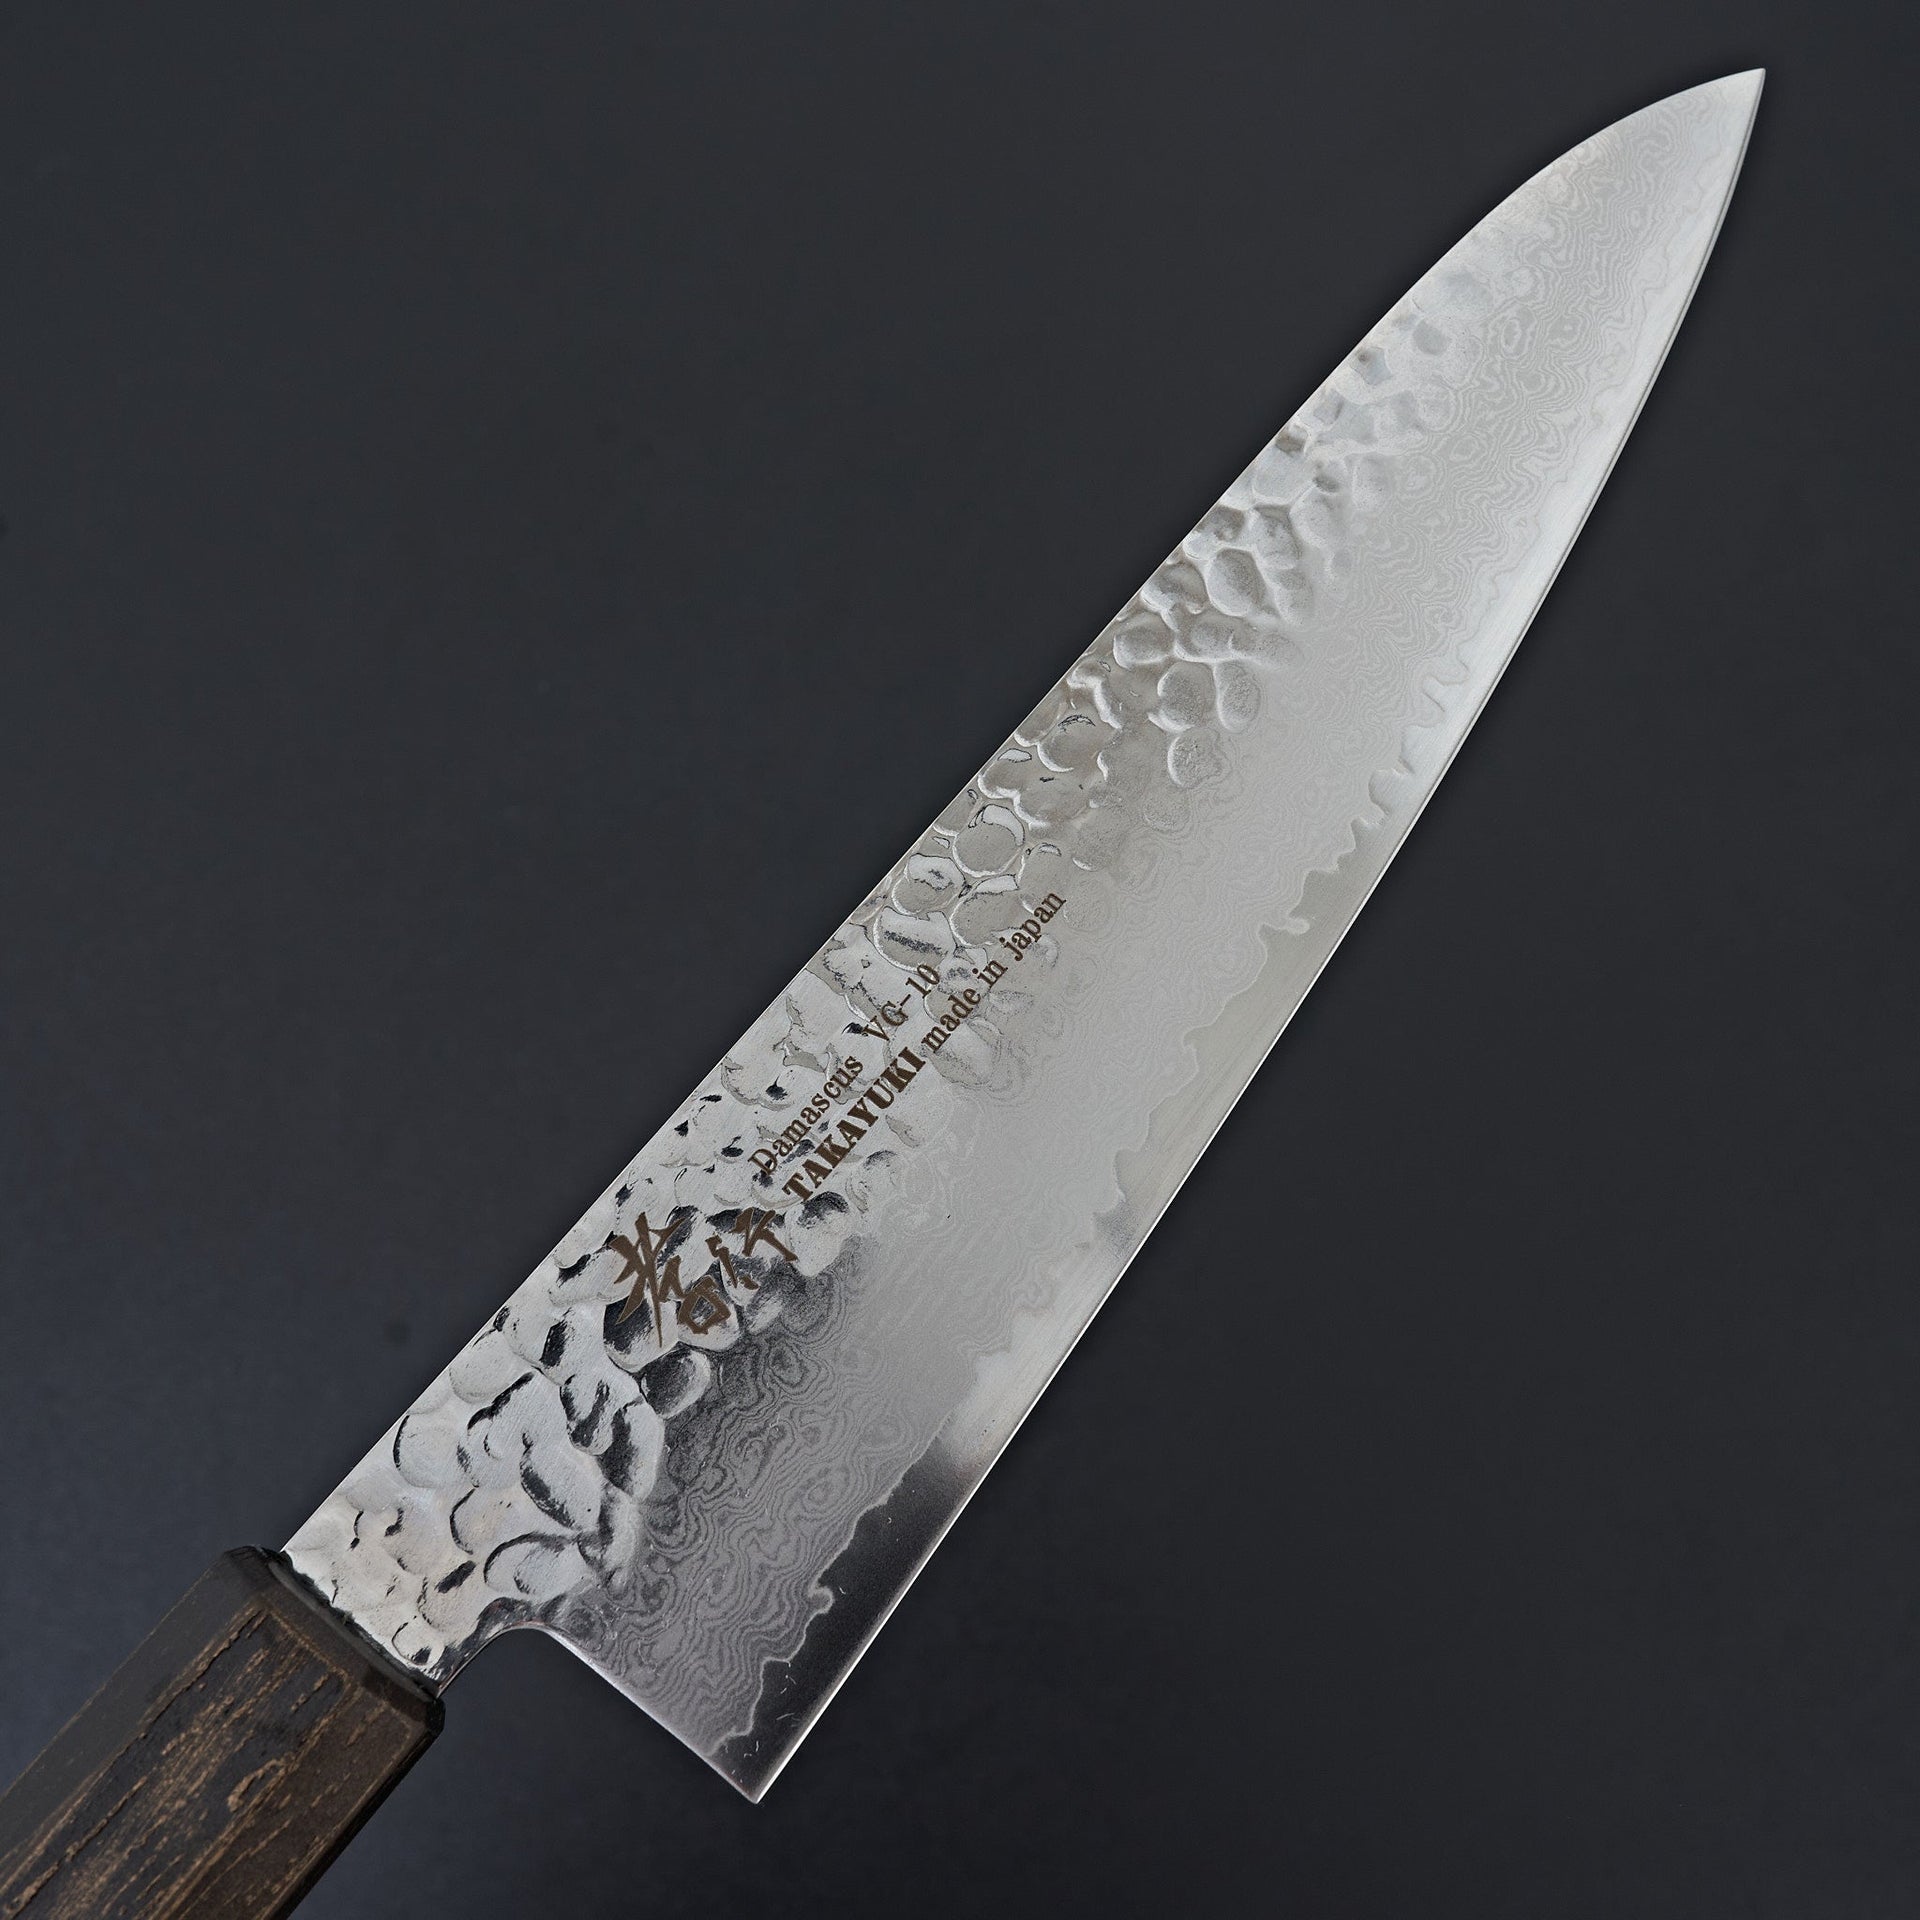 Sakai Takayuki Nanairo Black Lacquer 33 Layer Damascus Gyuto 210mm-Knife-Sakai Takayuki-Carbon Knife Co